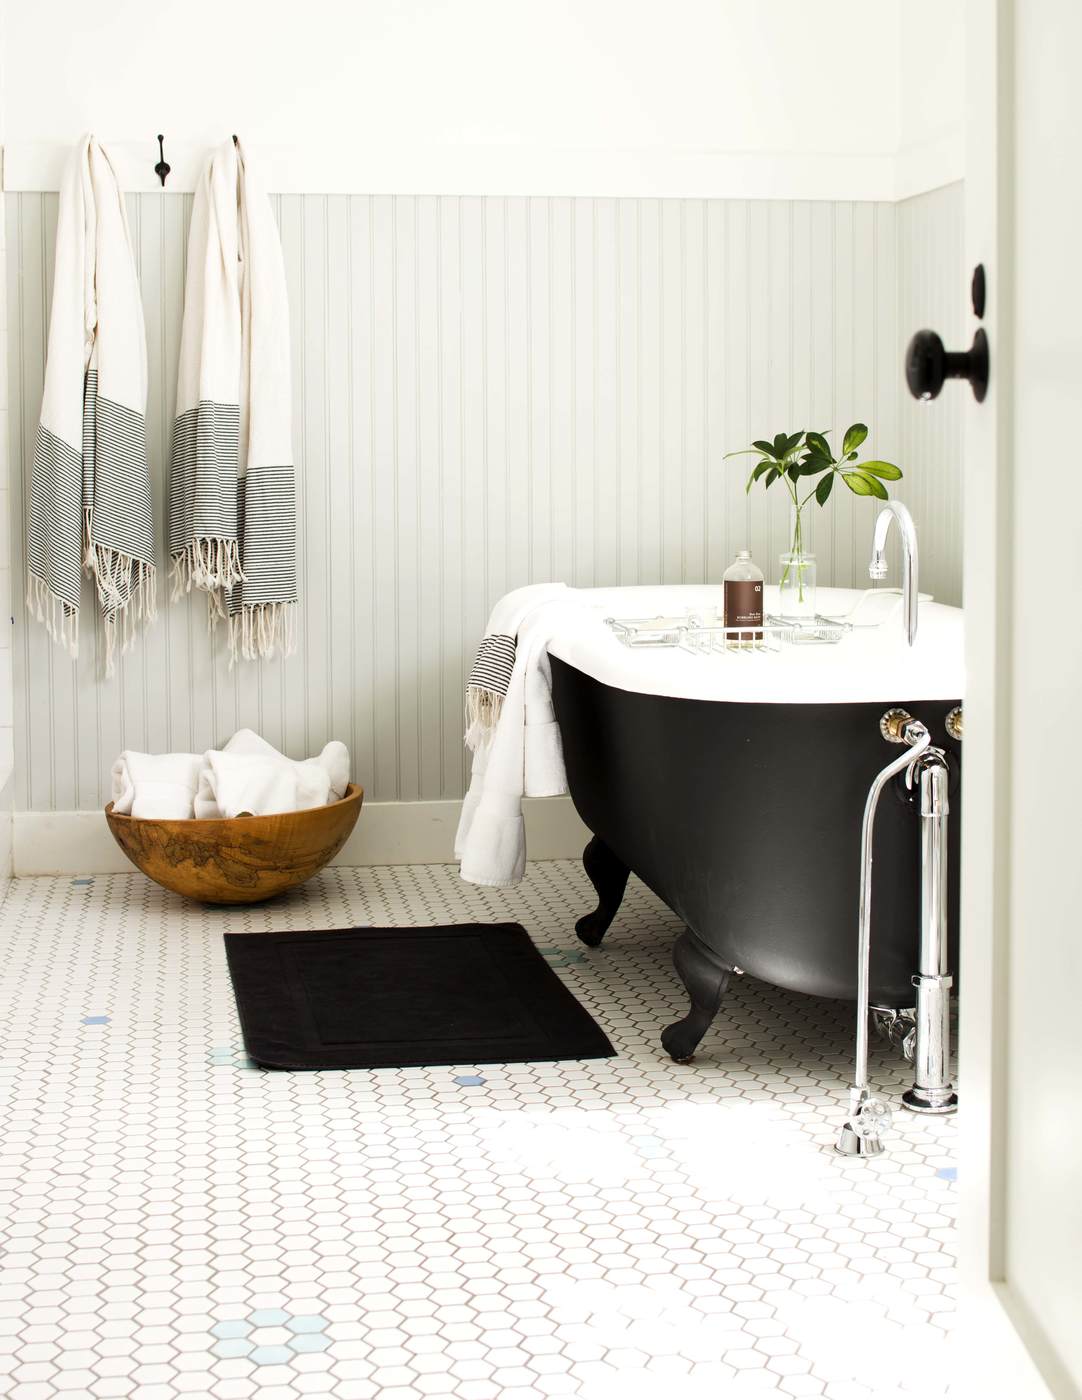 bathroom design inspiration - black tub